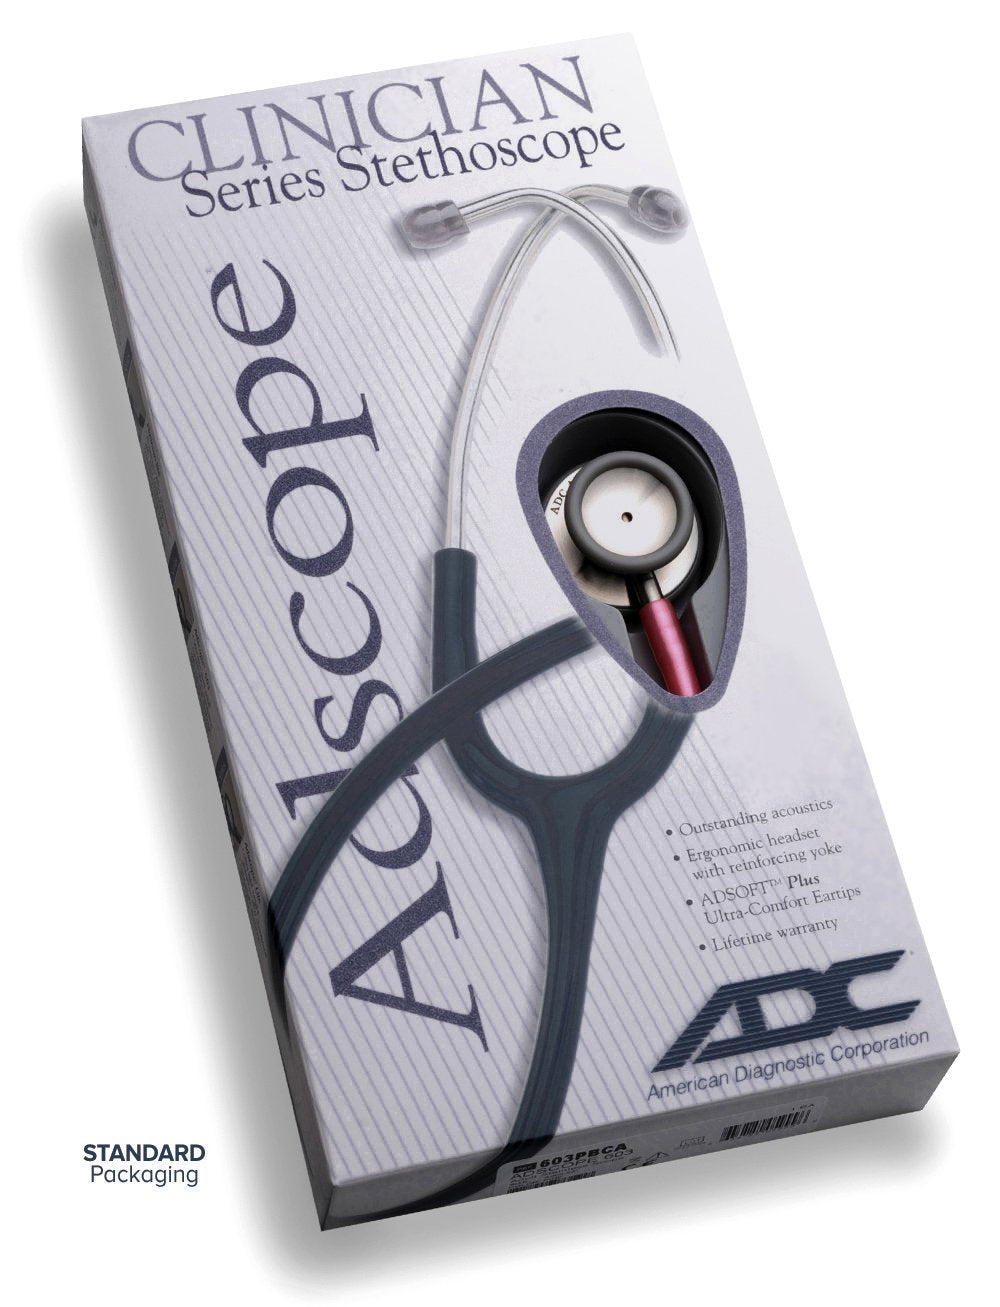 ADC Adscope Clinician 608 Stethoscope, BURGUNDY    **Item on Back Order**